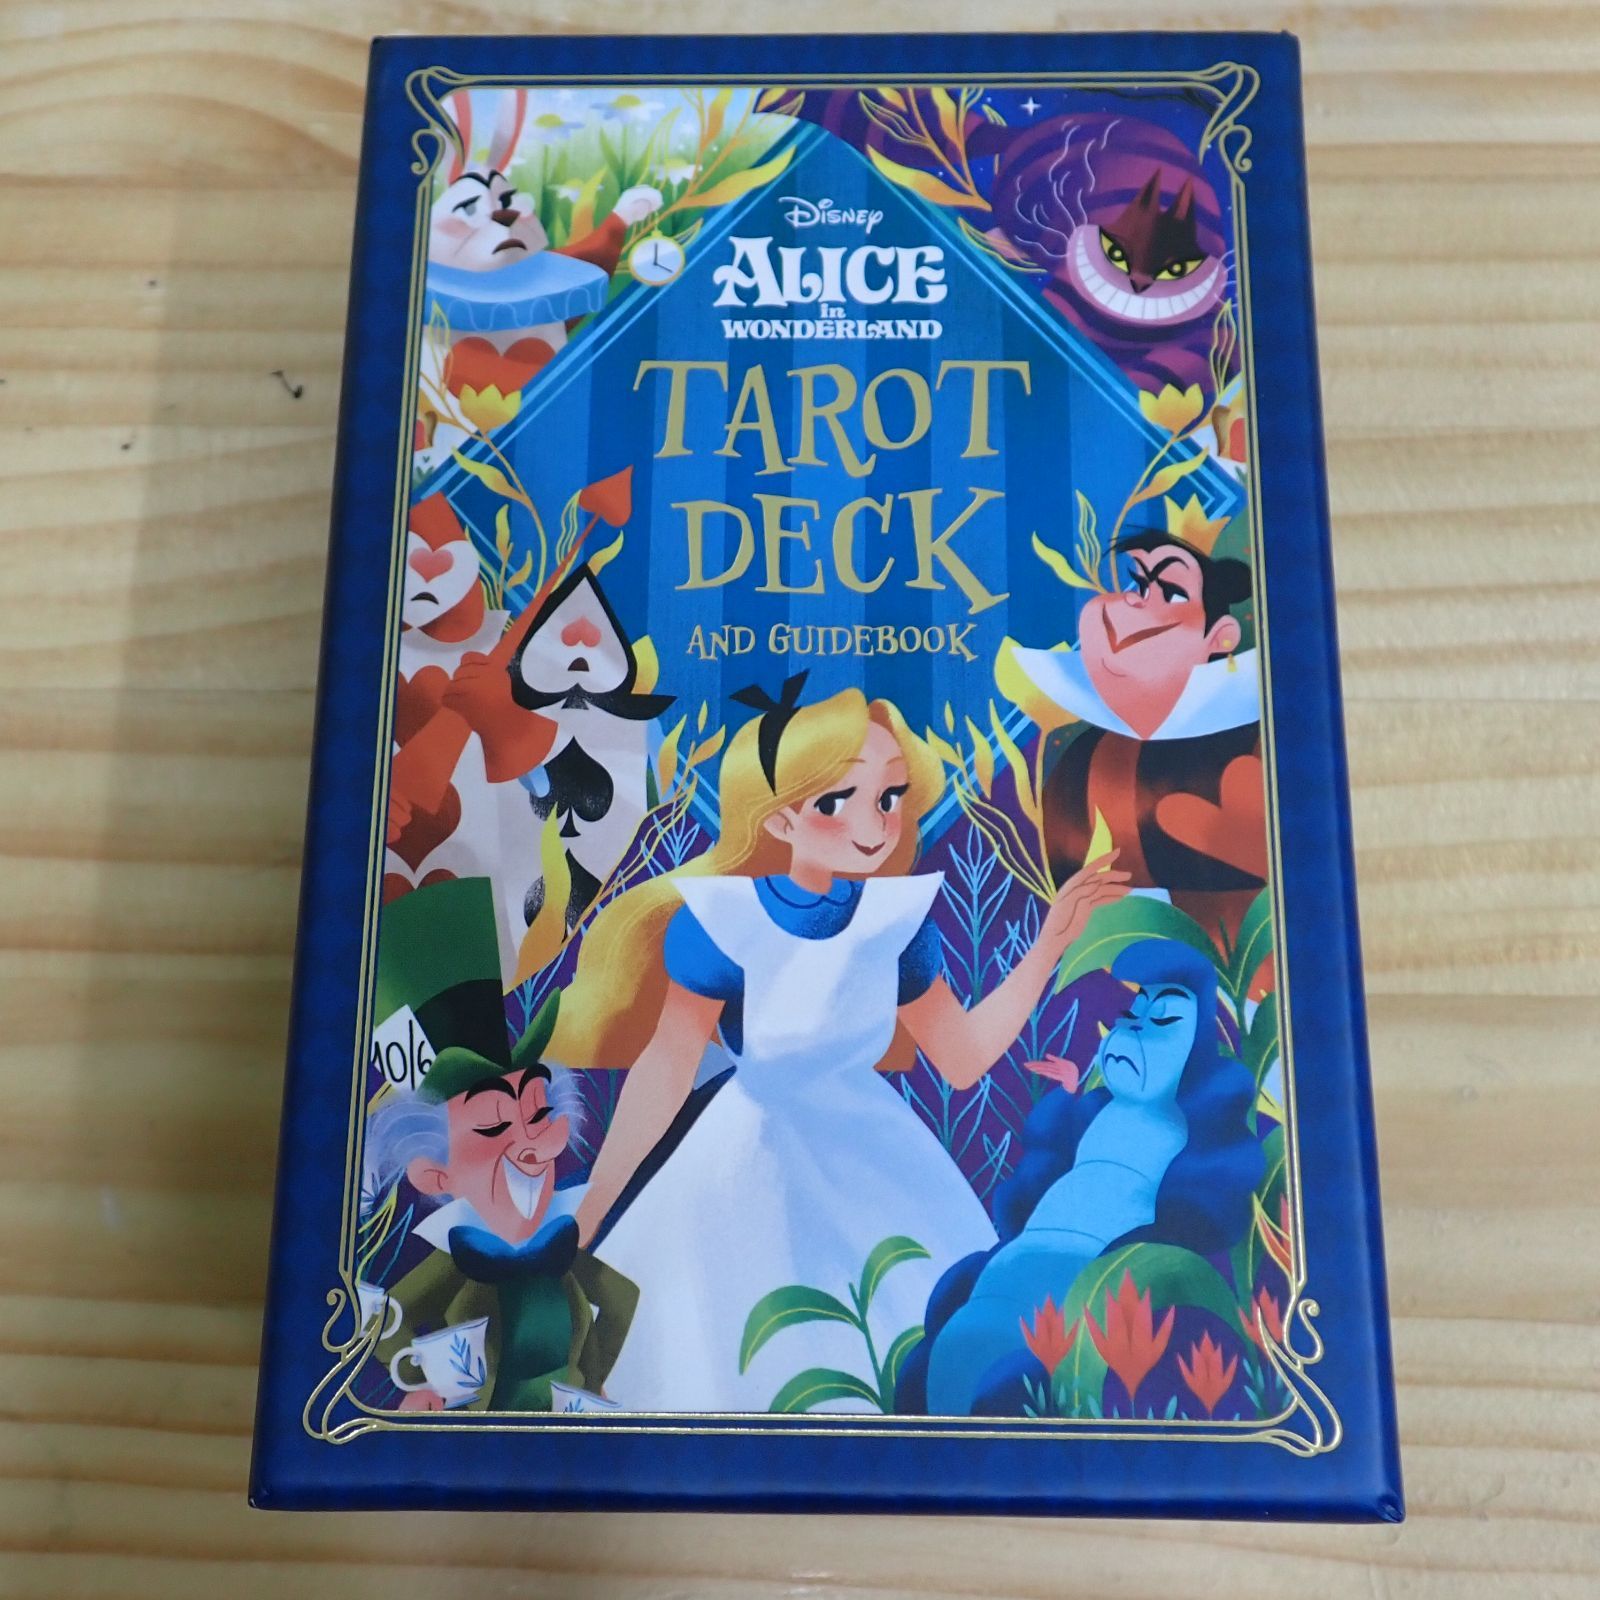 2305d1-39☆Alice in Wonderland Tarot Deck and Guidebook (Disney 